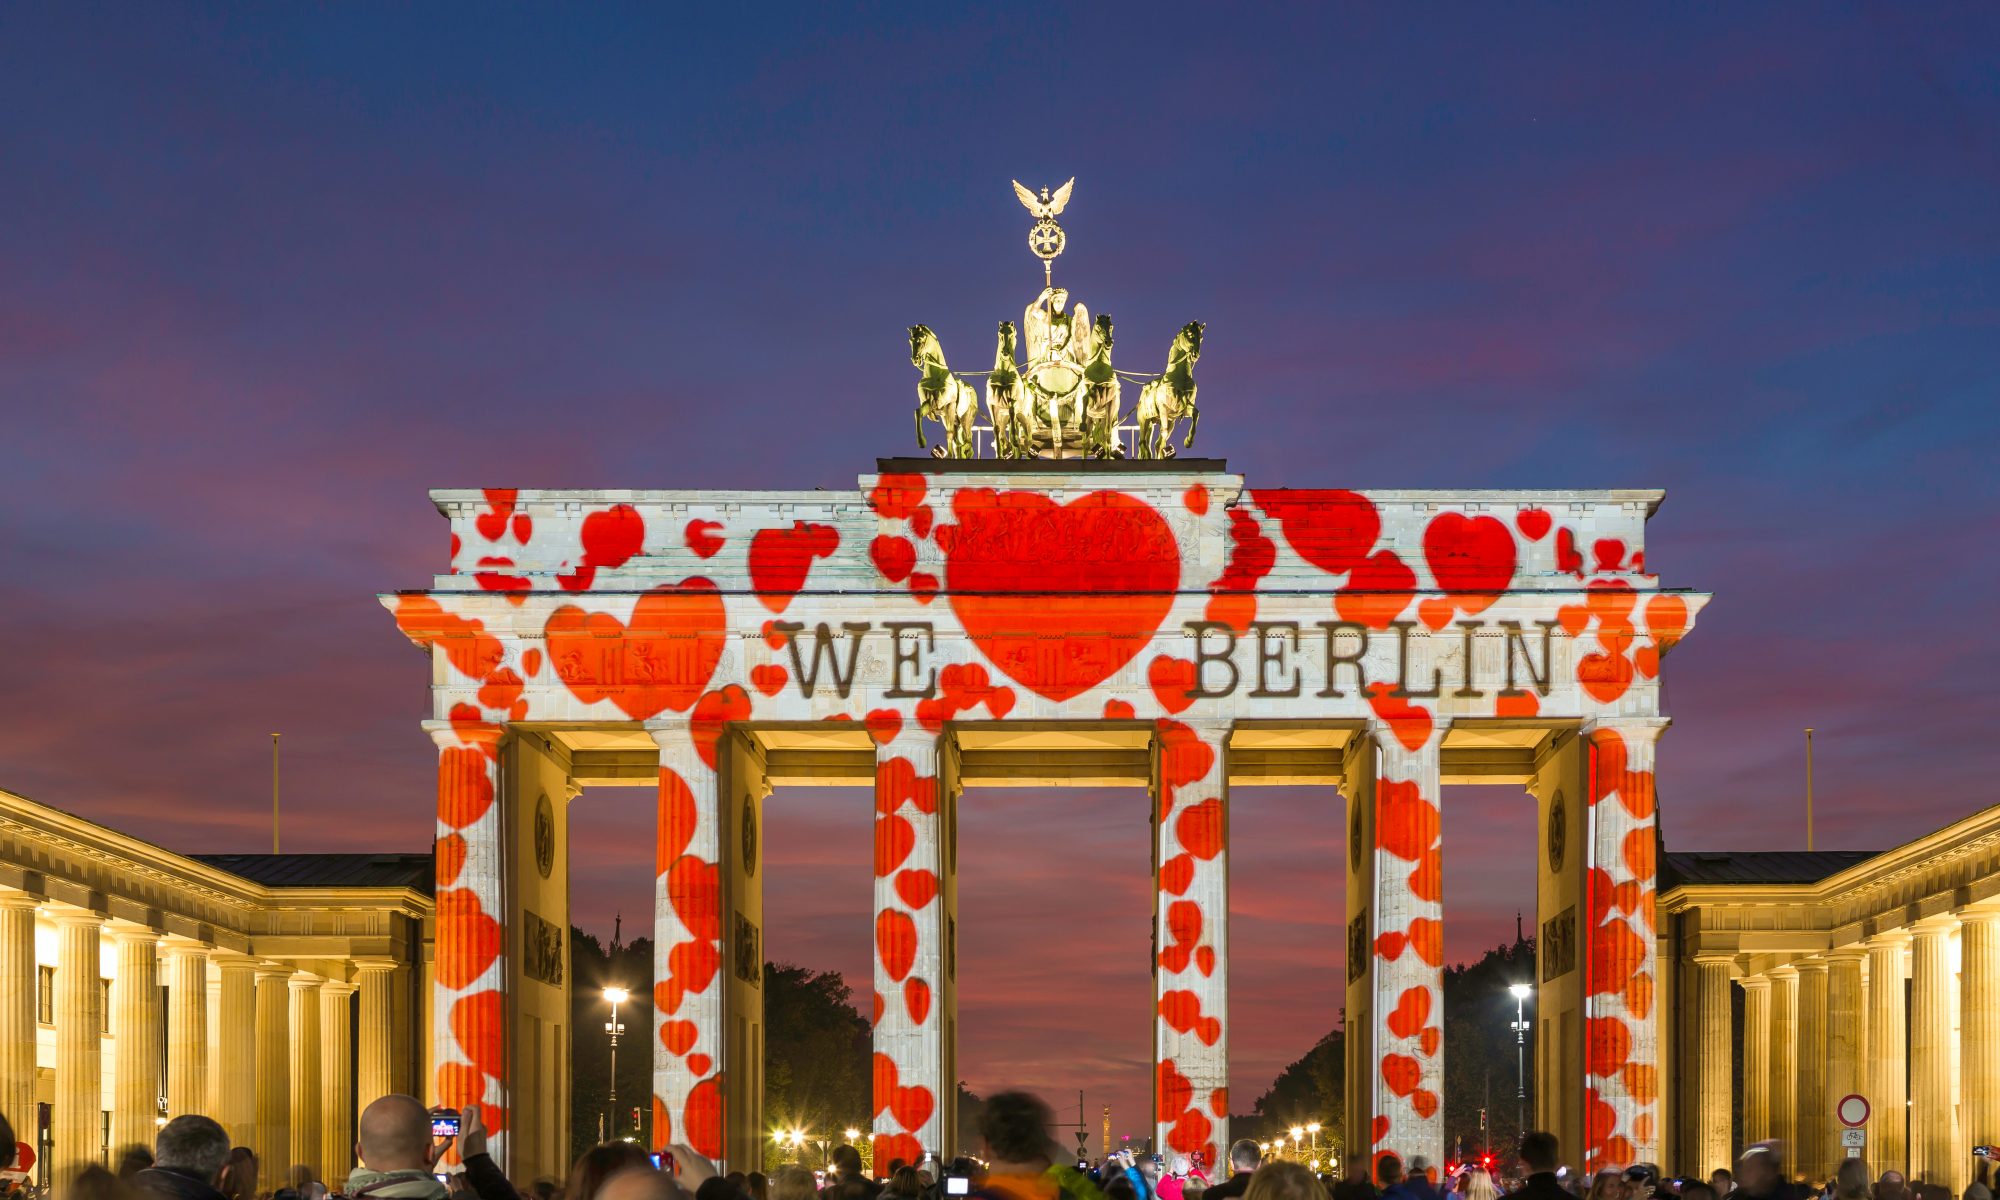 Brandenburger Tor ◆ With love to Berlin ◆ powered by Zander & Parnter